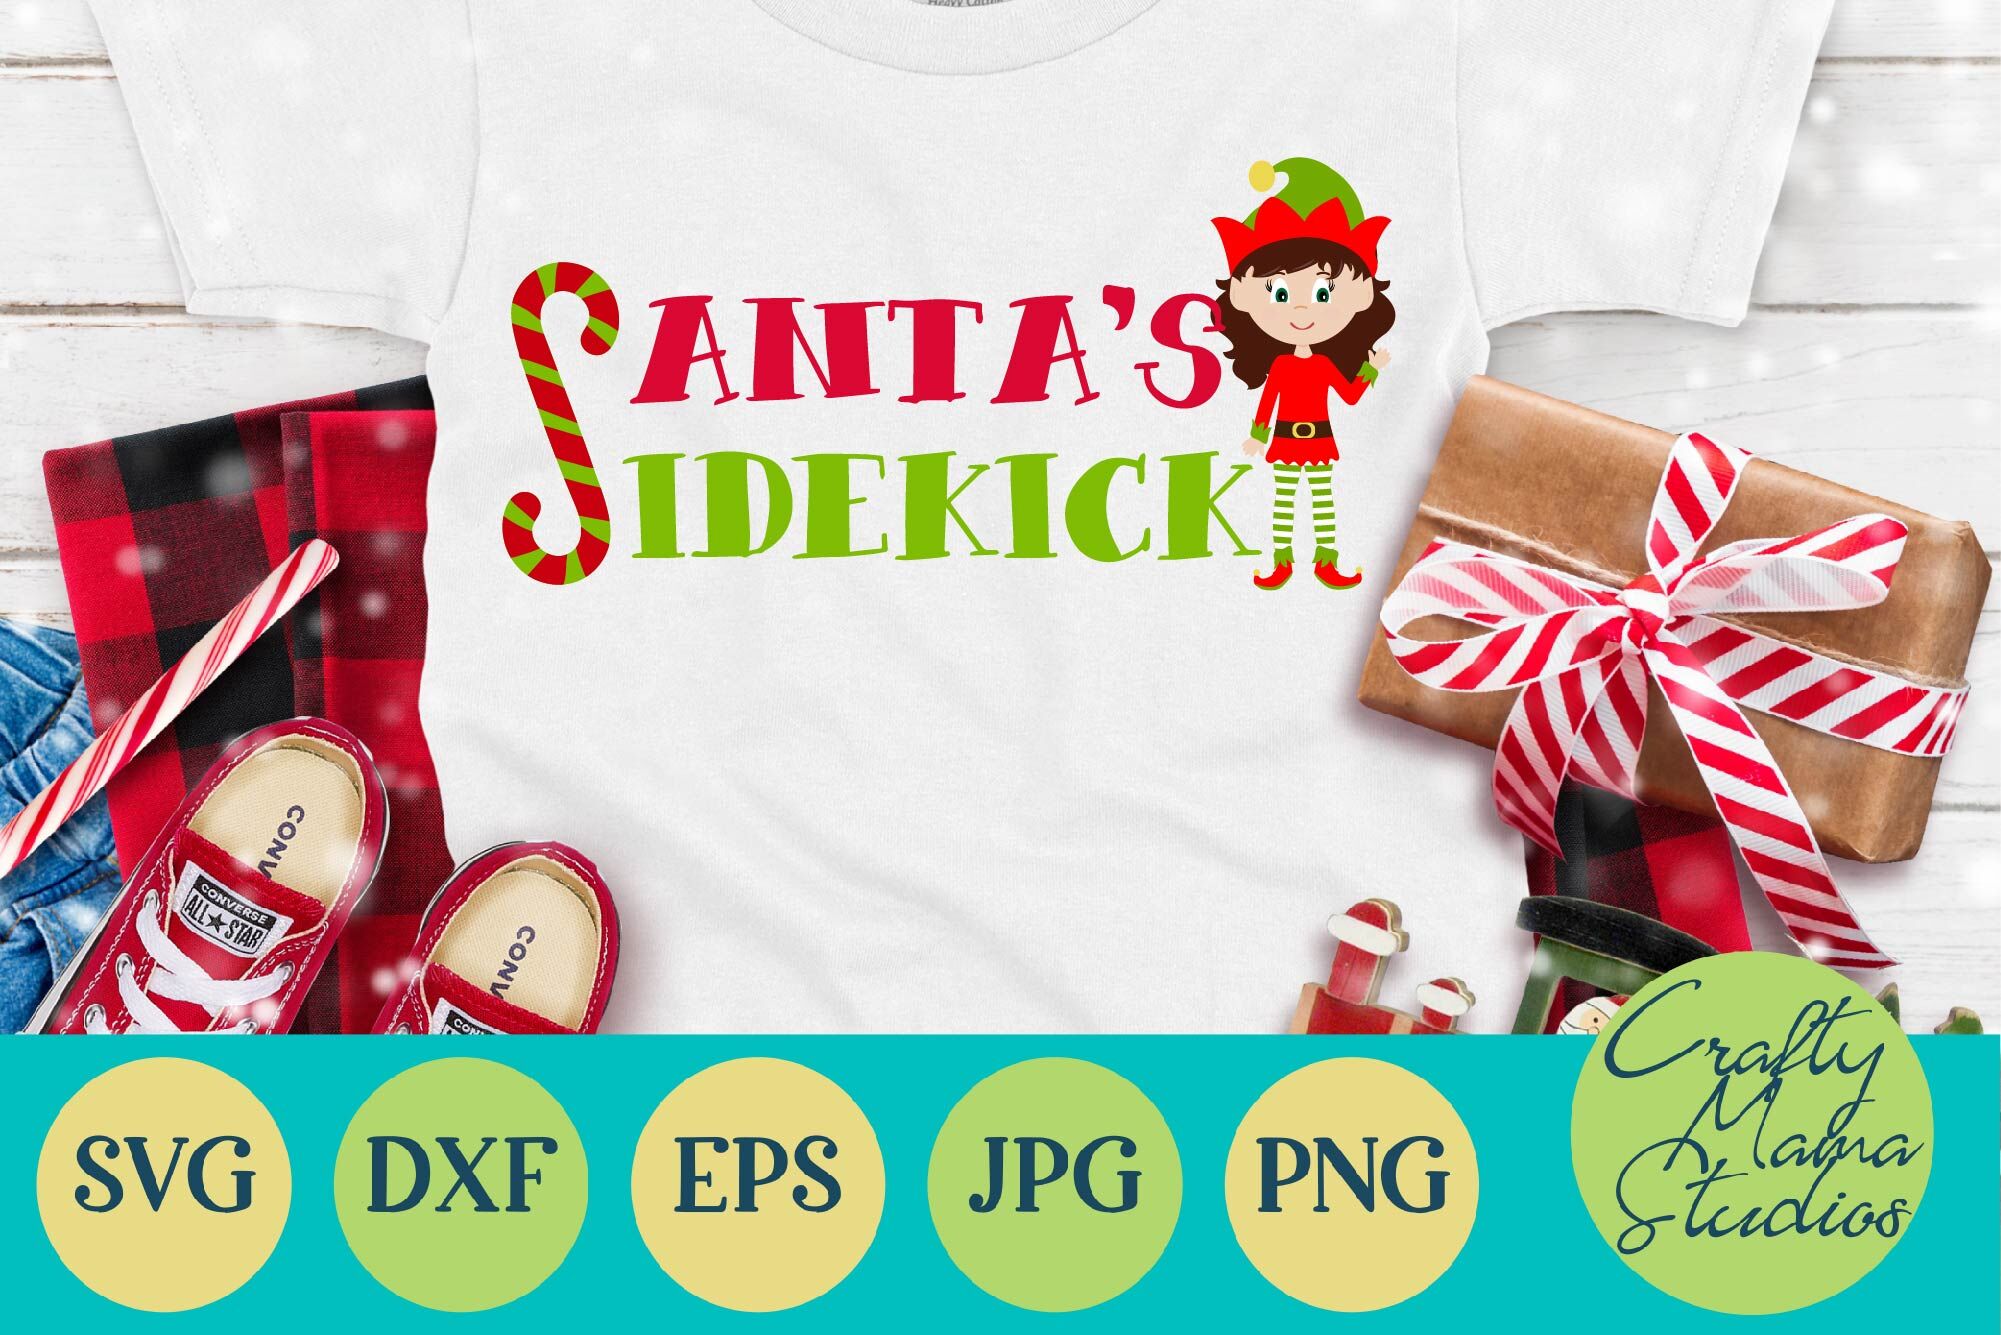 Christmas Svg Santa S Sidekick Svg Kid S Christmas By Crafty Mama Studios Thehungryjpeg Com